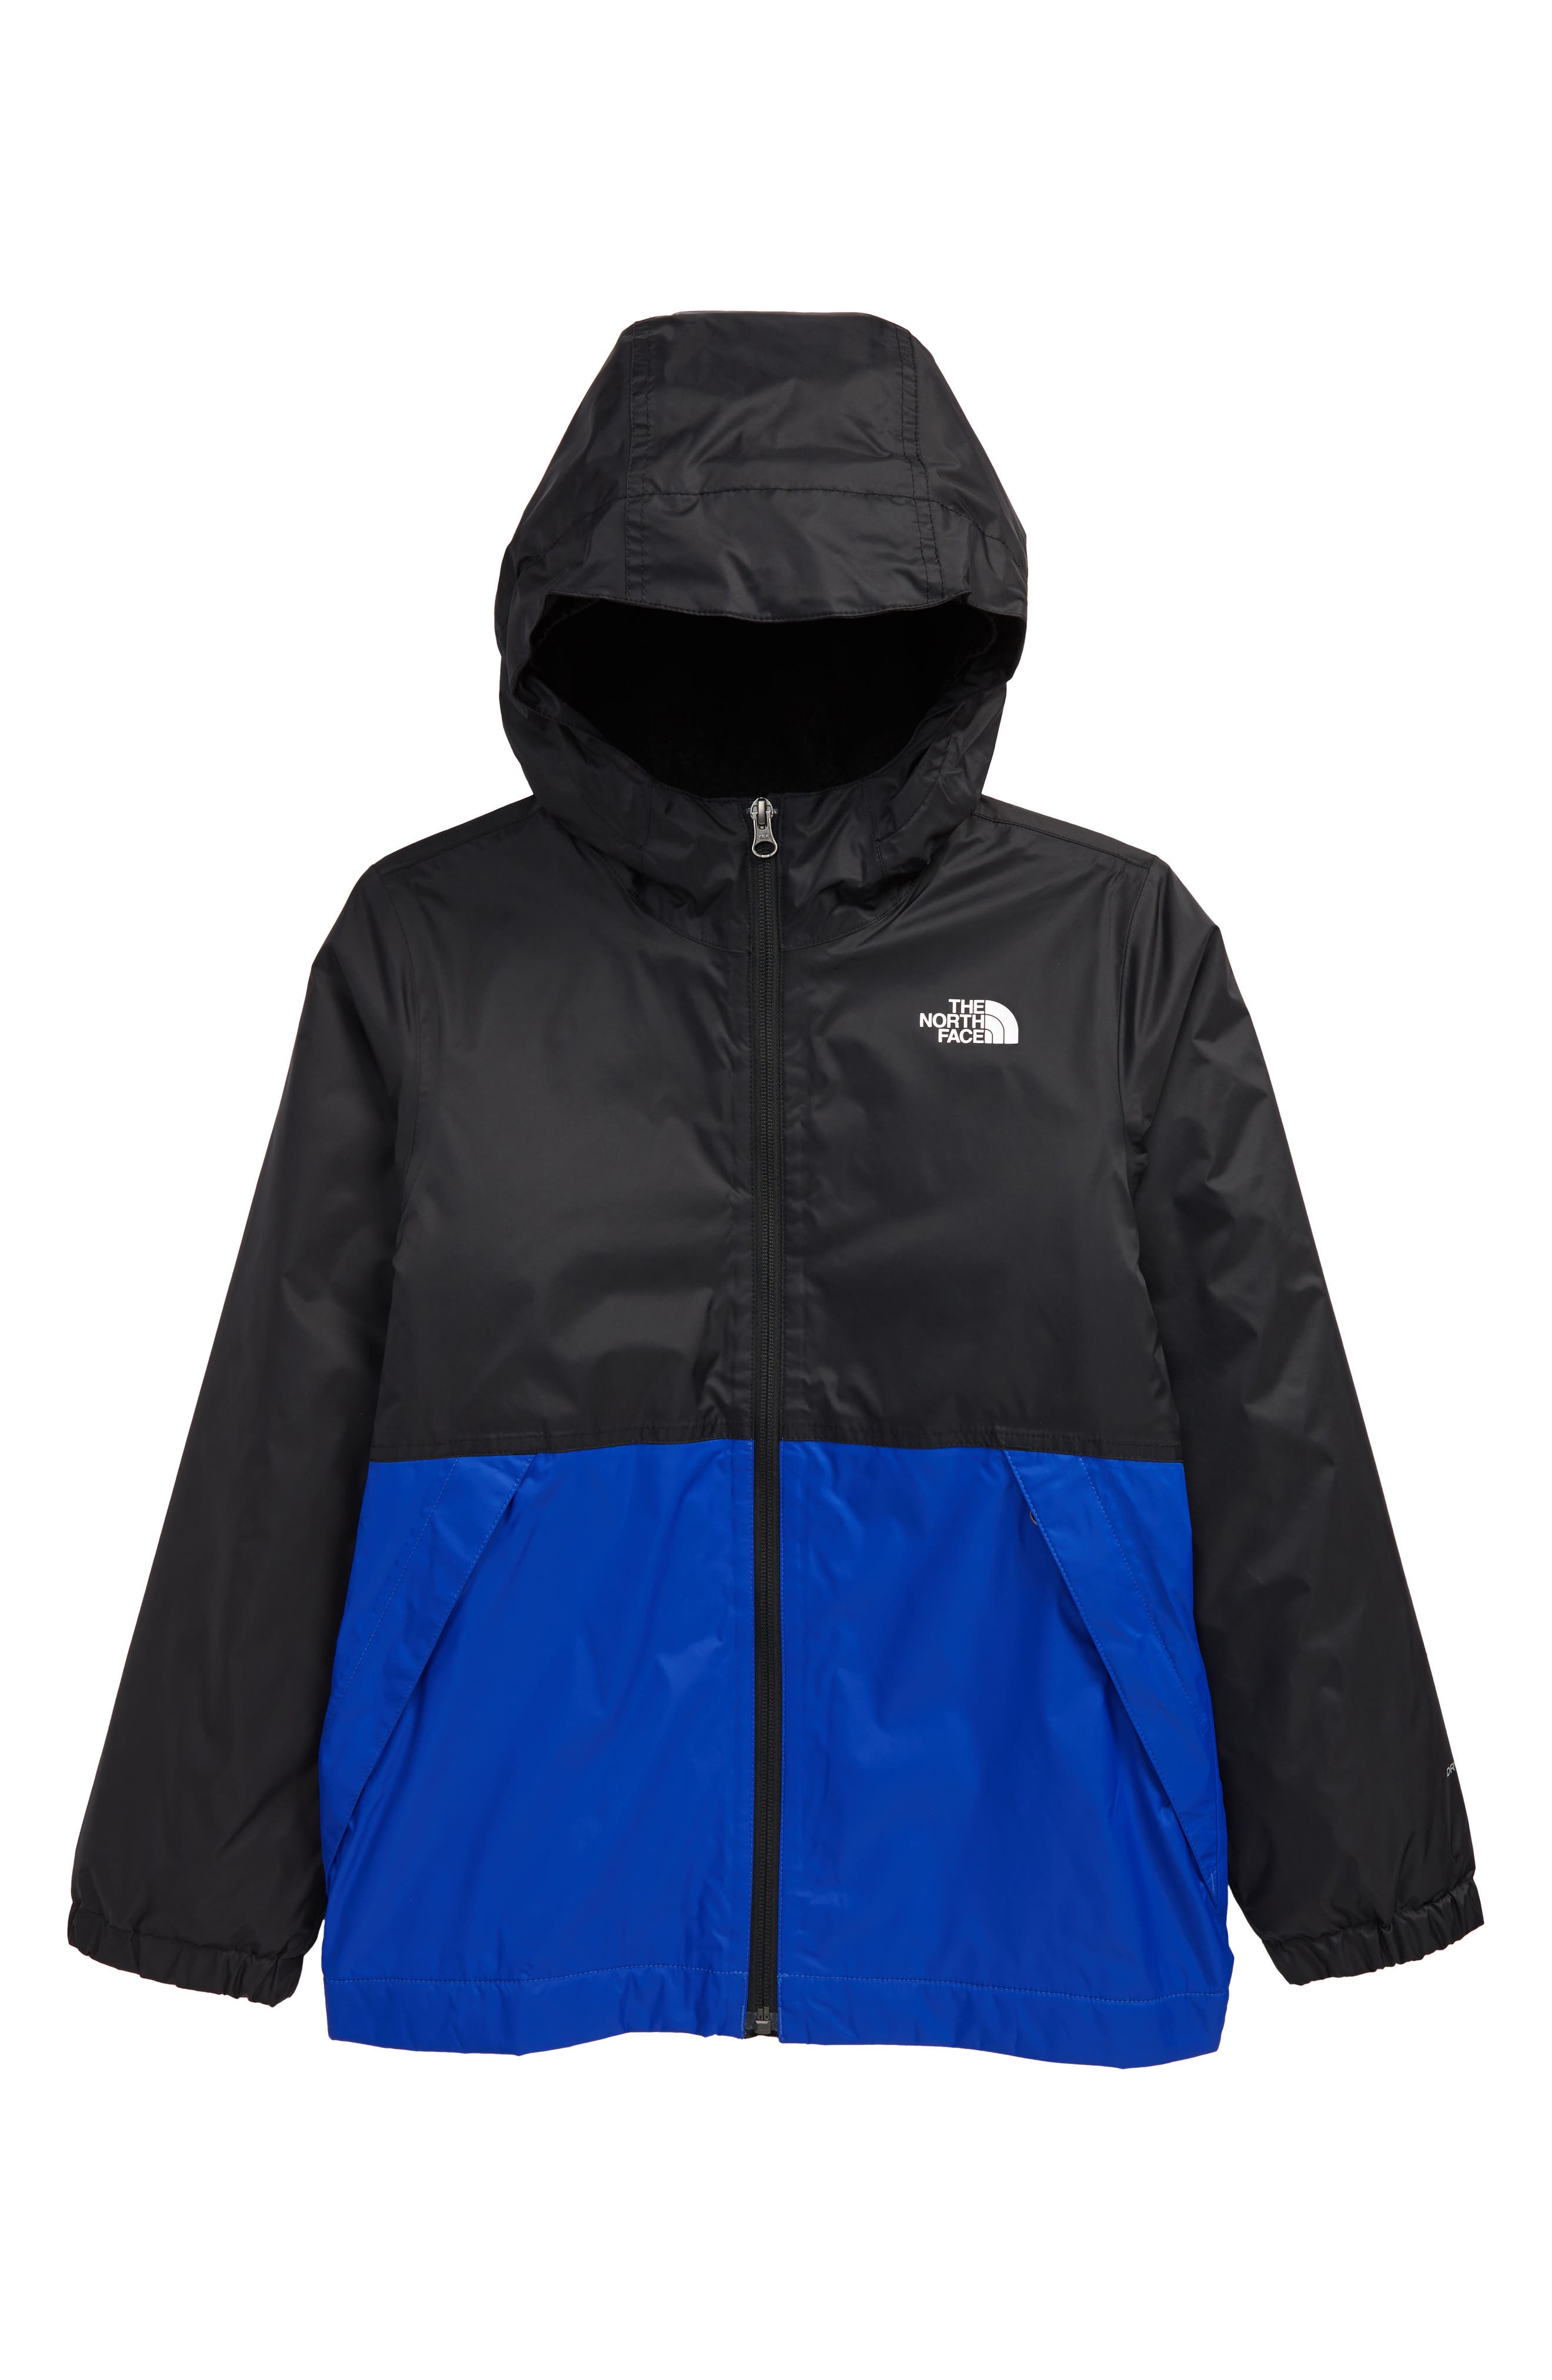 Candy-Baby Kids Boys Girls Waterproof Hooded Rain Coat//Raincoat Jacket for Children 5T-10T